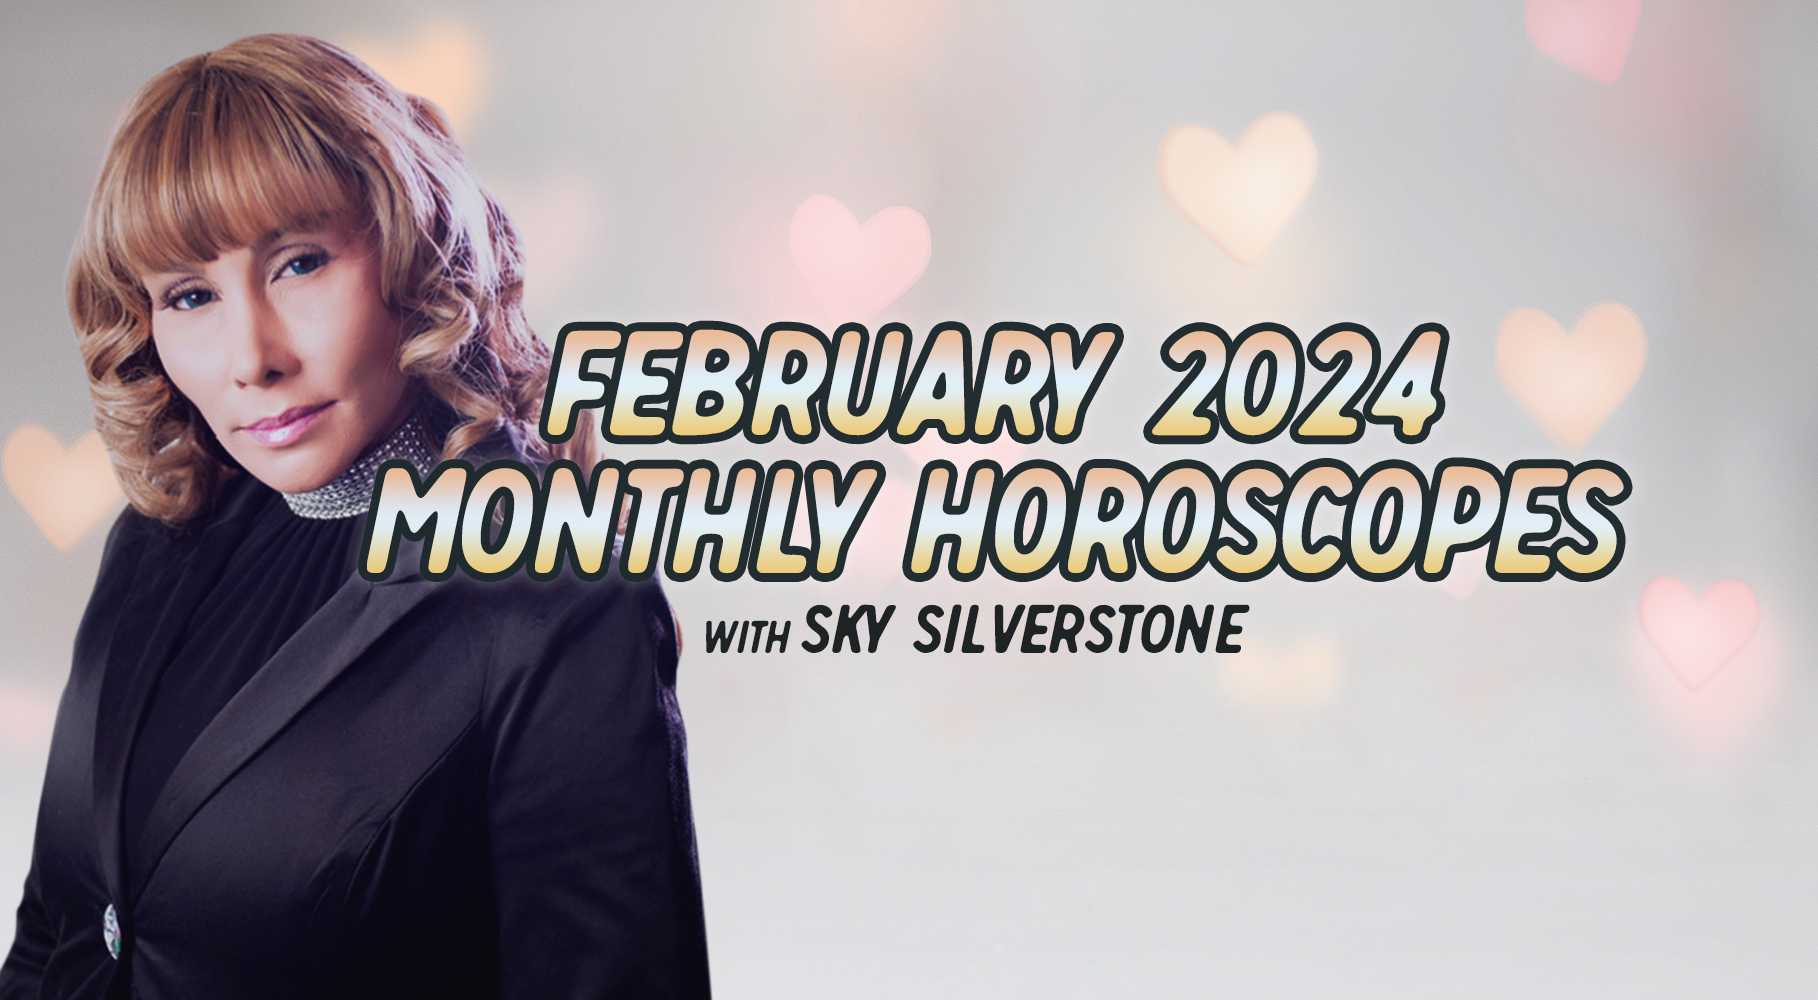 Horoscopes: February 2024 Monthly Horoscopes by Sky Silverstone